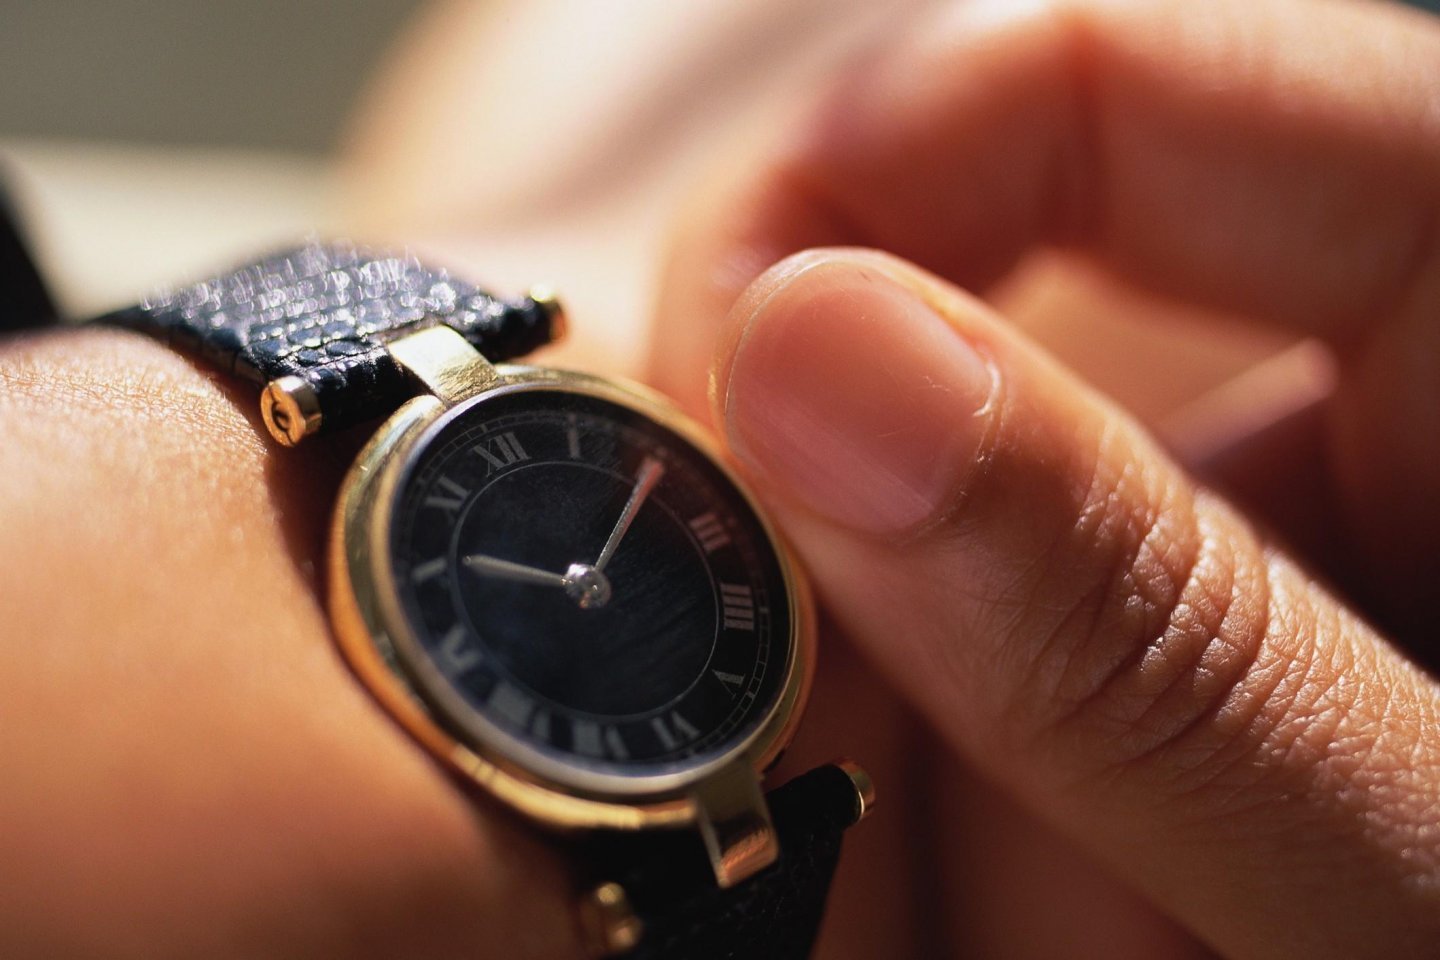 Часы в подарок мужчине почему нельзя. Часы на руке. Наручные часы на руке. Красивые часы на руку. Рука с часами.